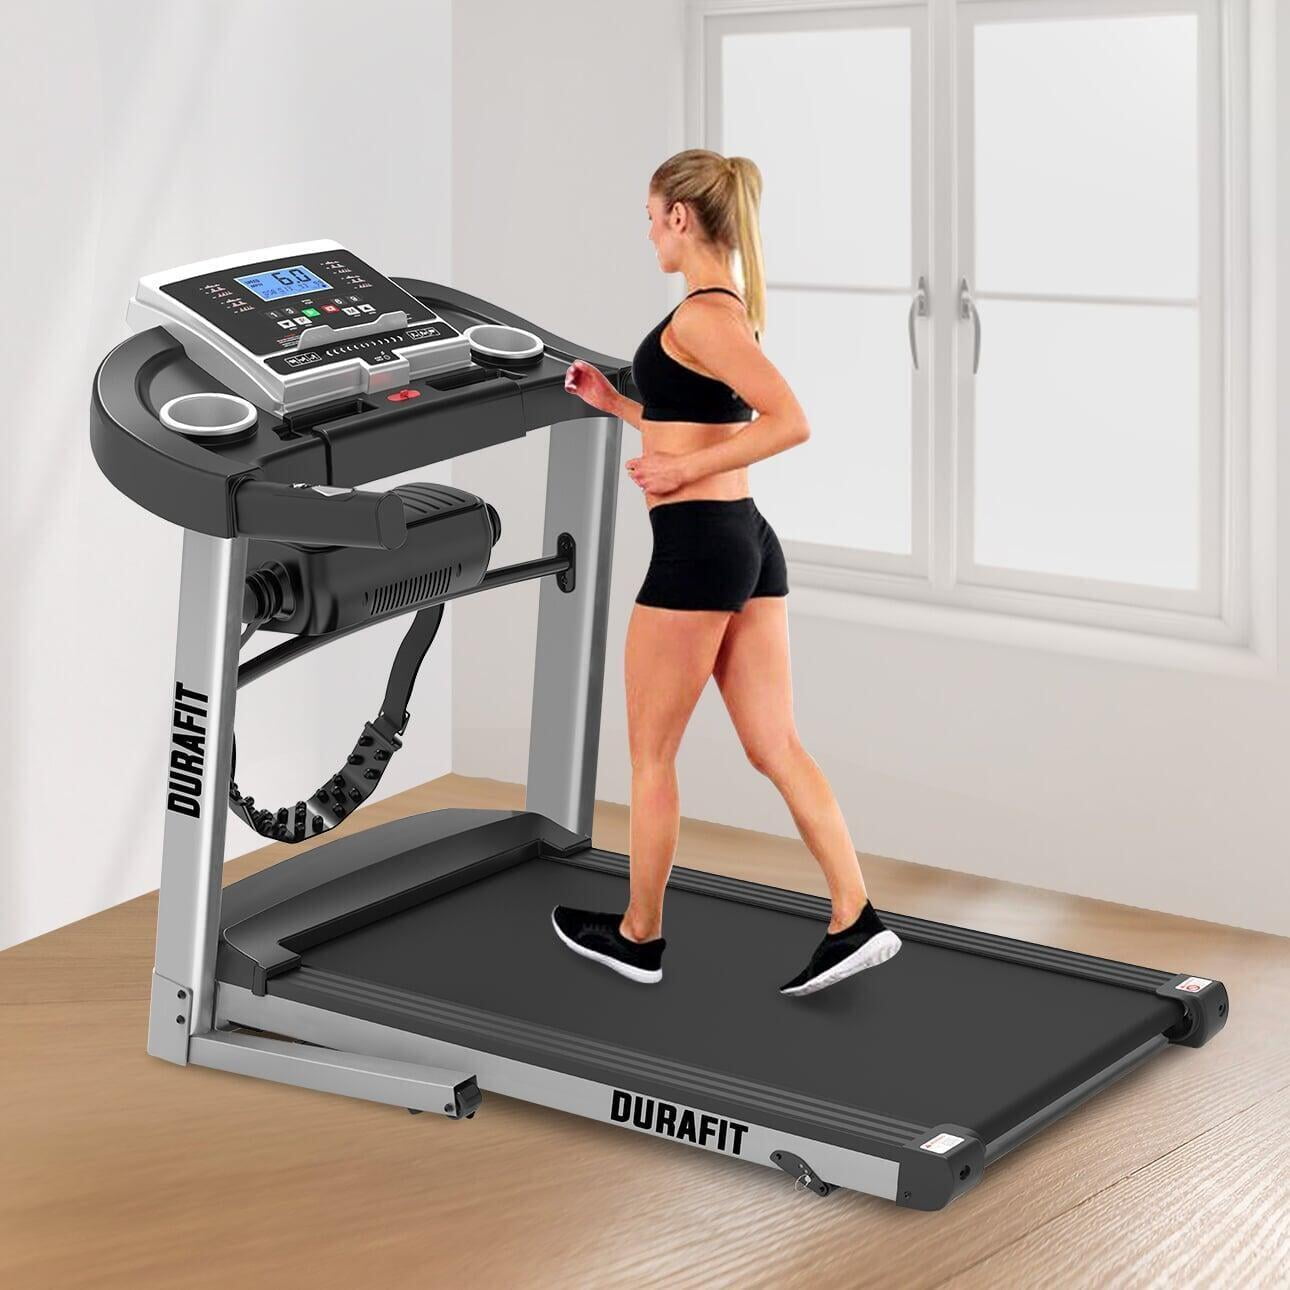 Durafit strong multifunction treadmill 